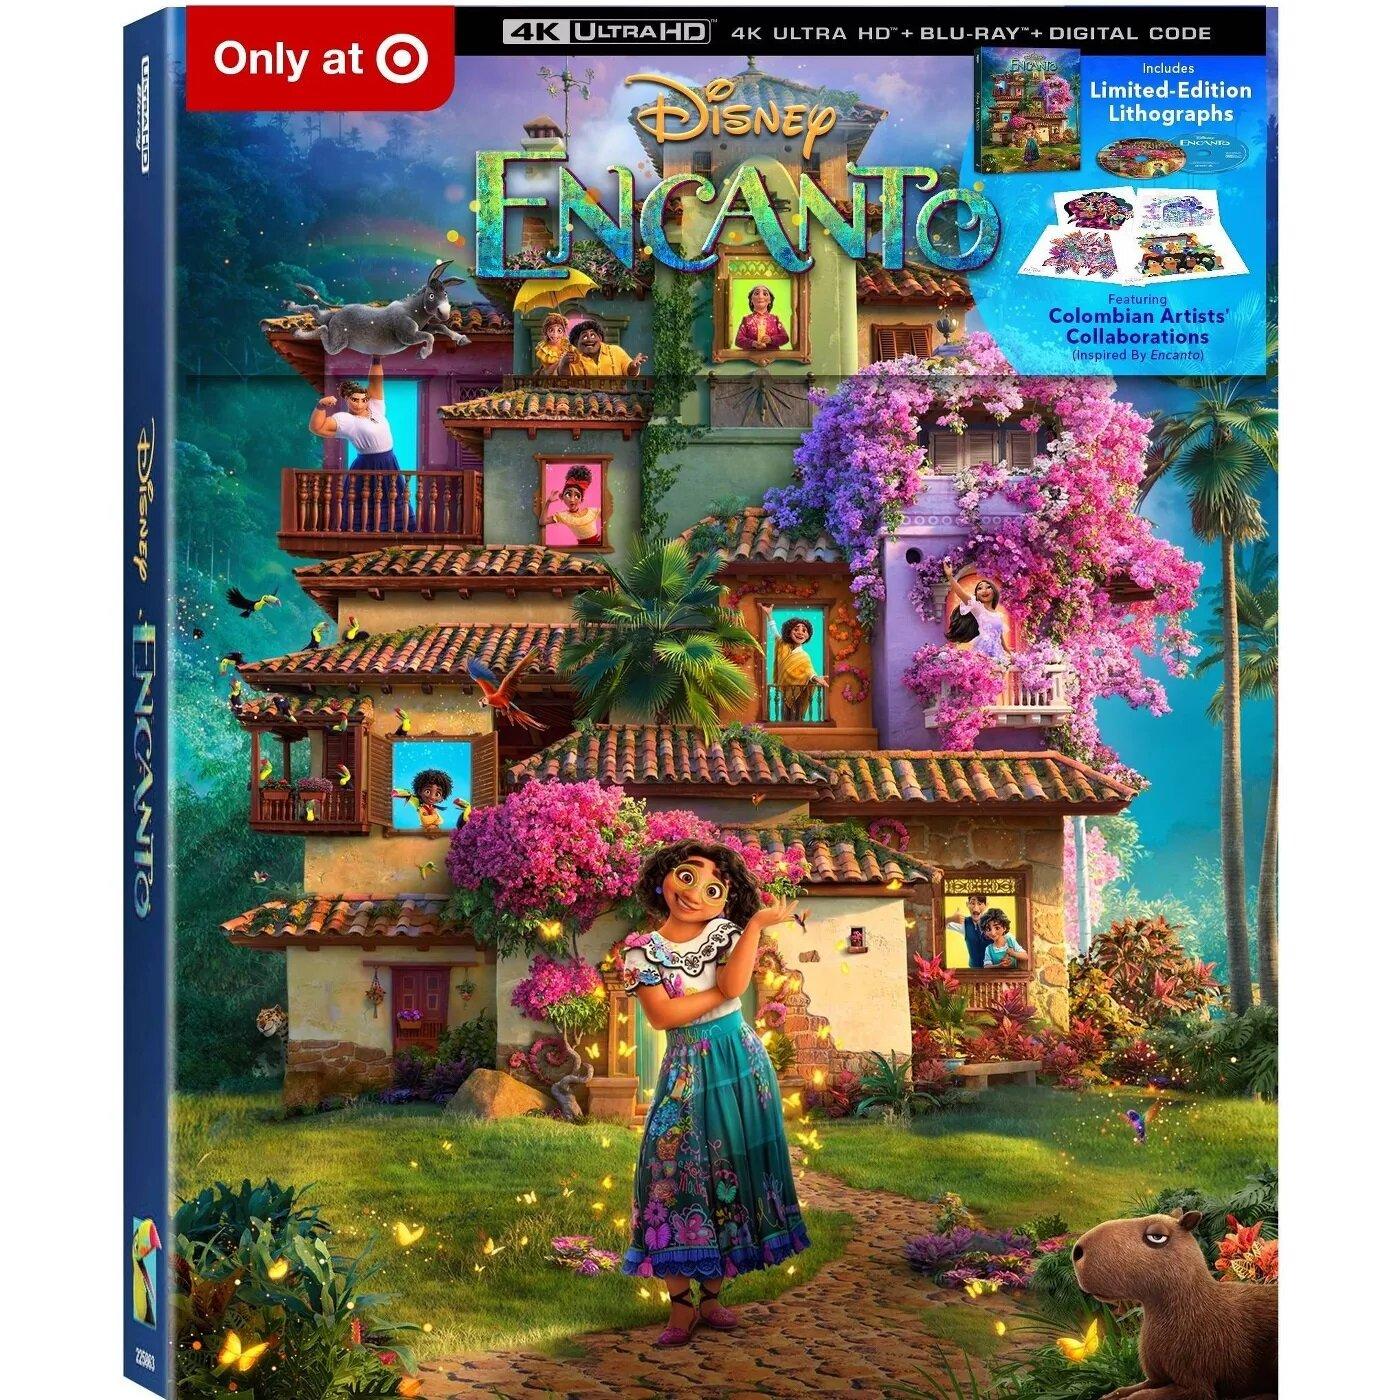 Encanto 4K Blu-ray for $15